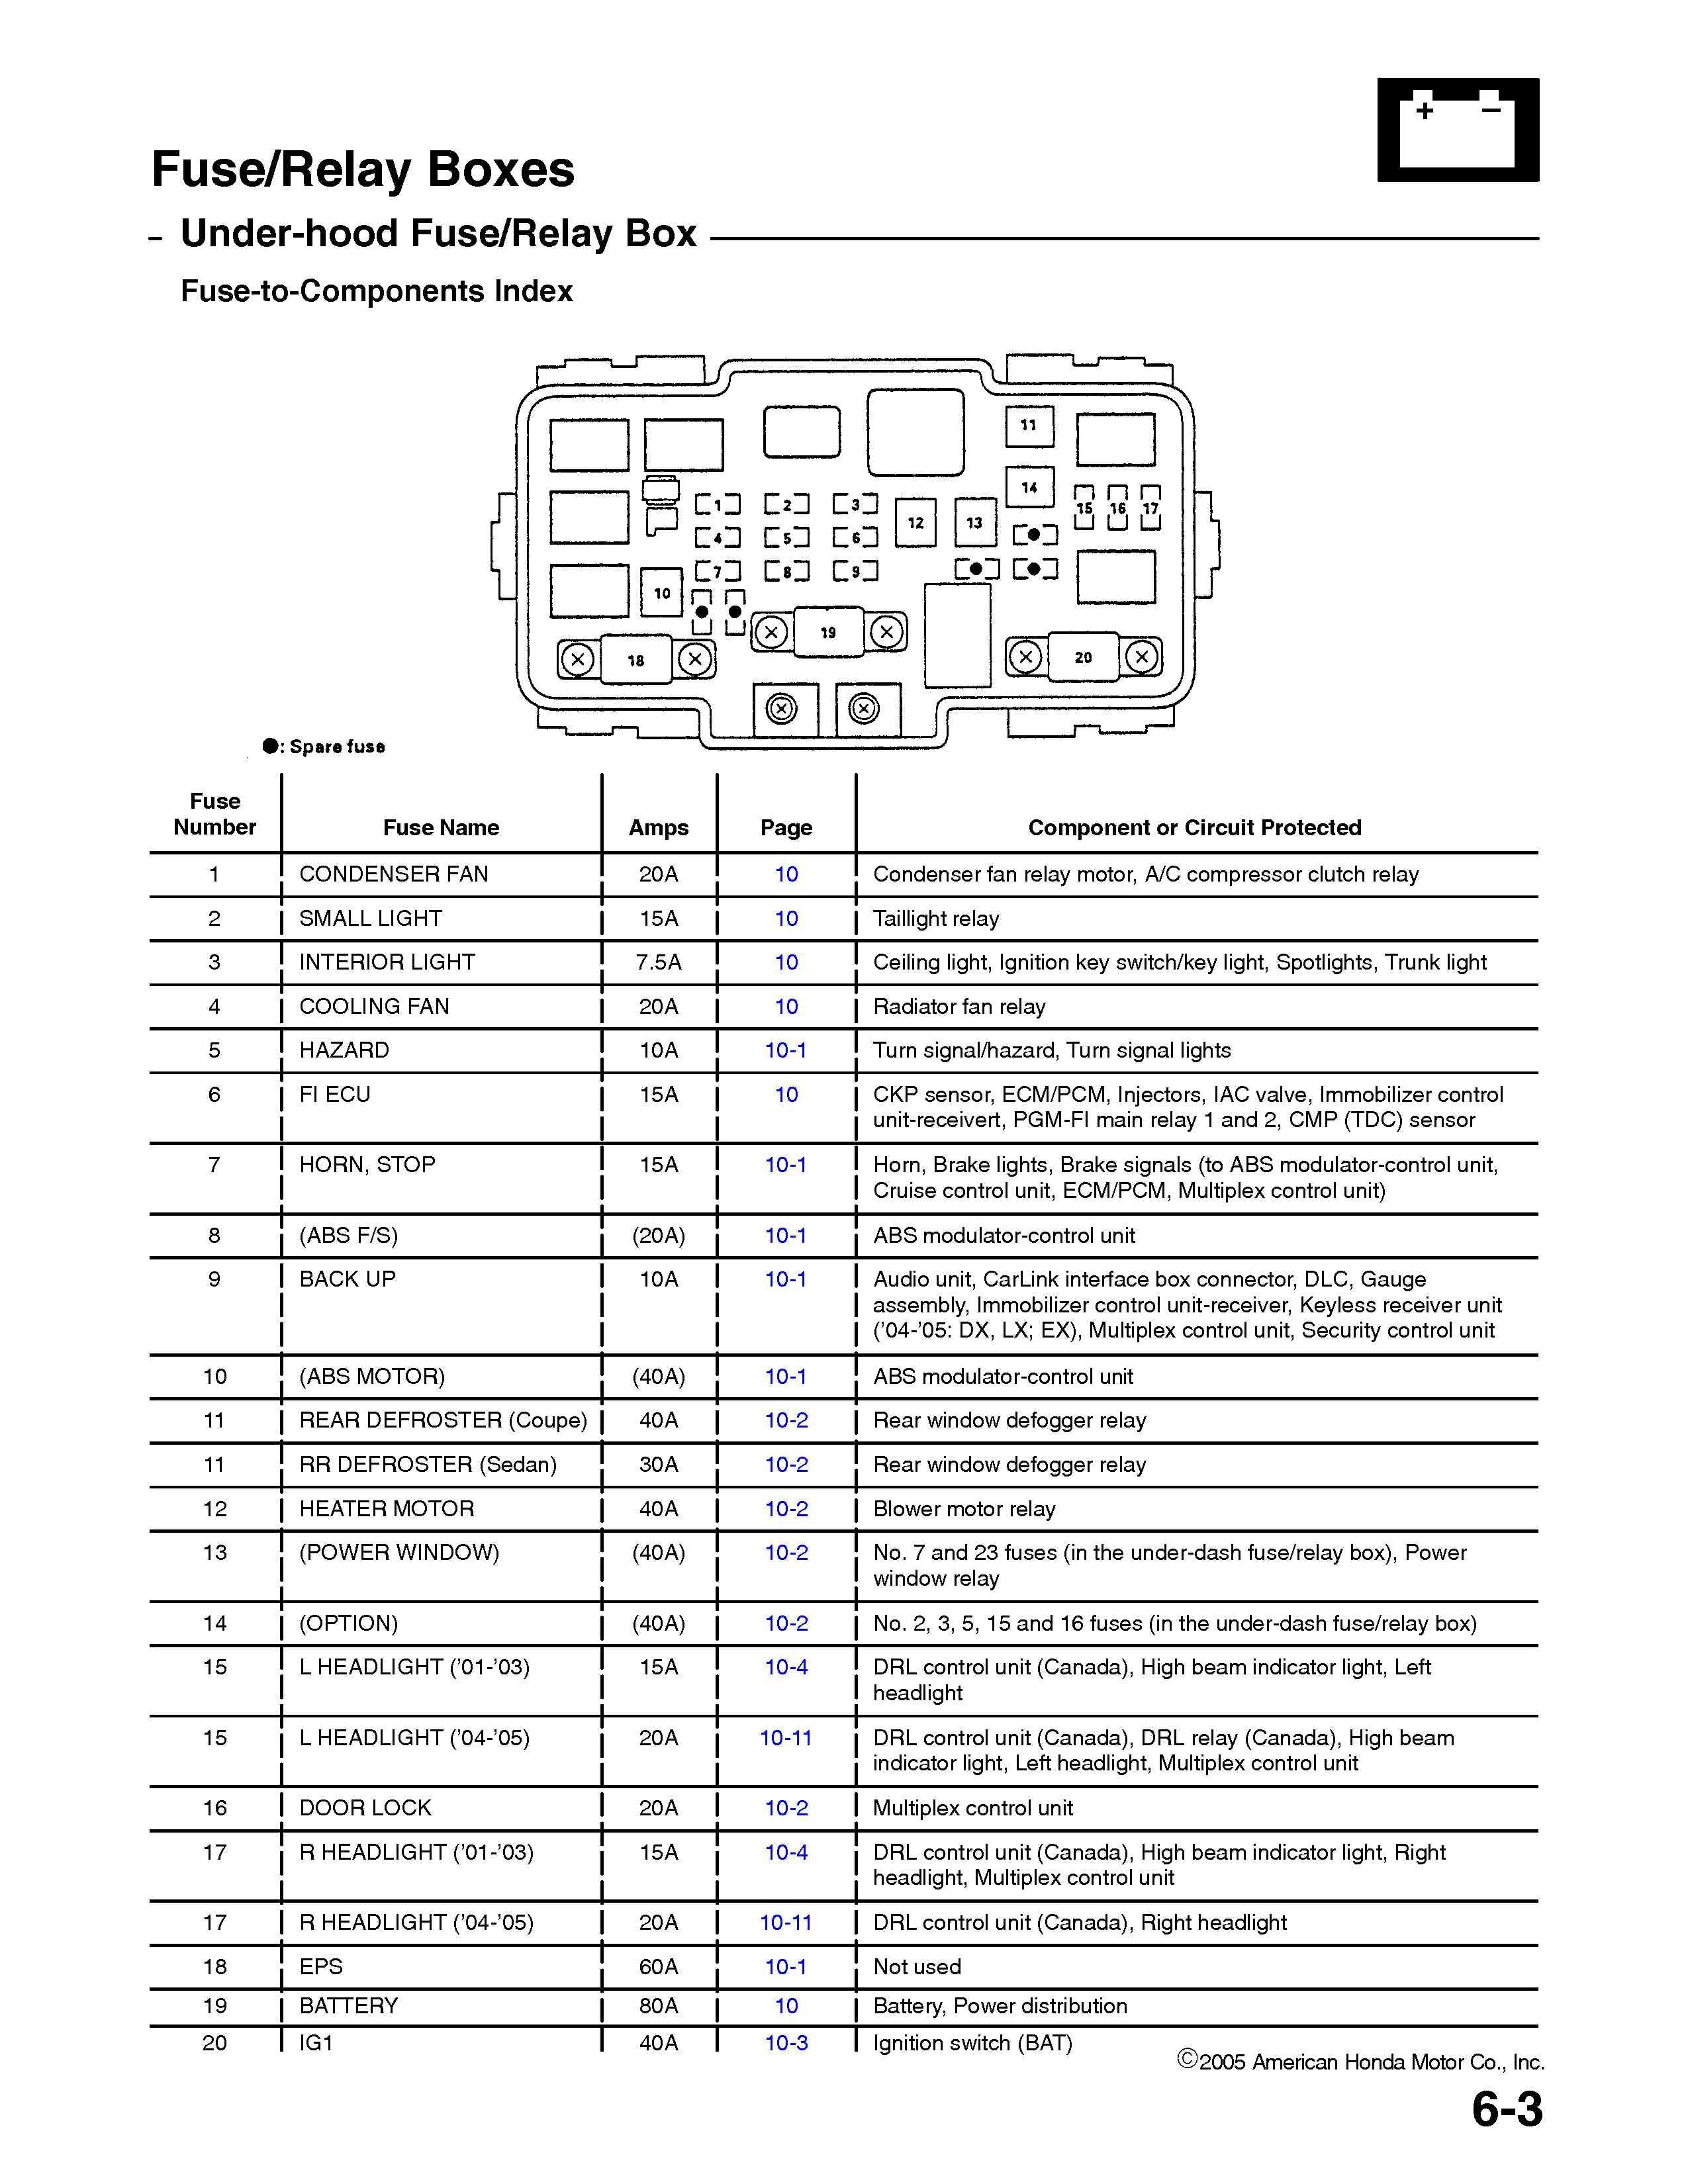 2008 Honda Civic Fuse Box Diagram 2008 Honda Fuse Diagram Wiring Diagram Information